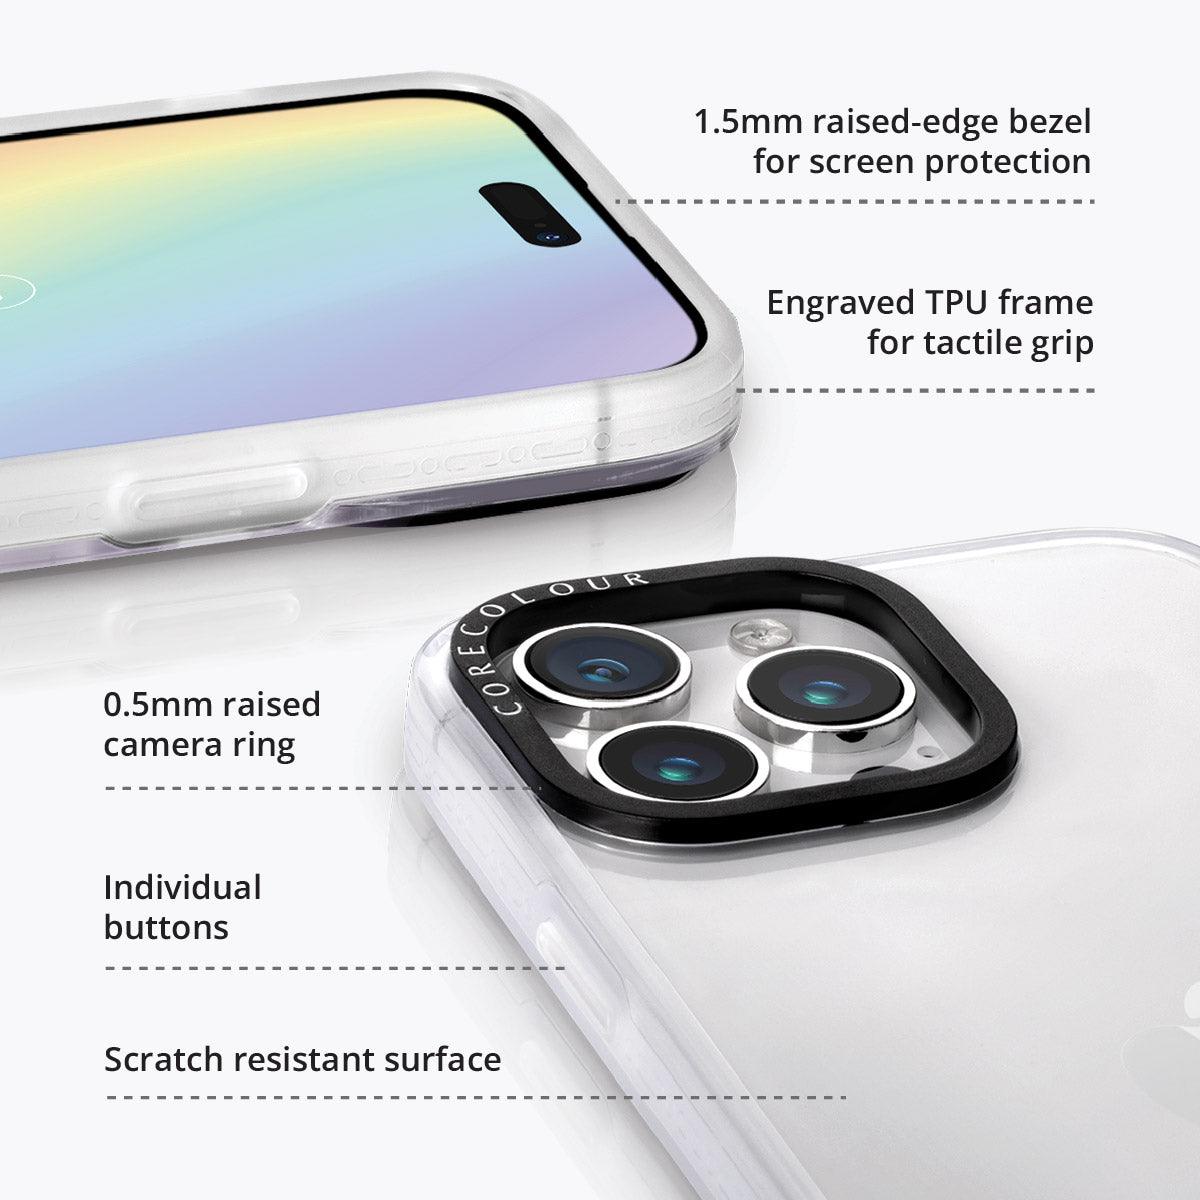 iPhone 15 Pro Max Moving Panda Phone Case - CORECOLOUR AU